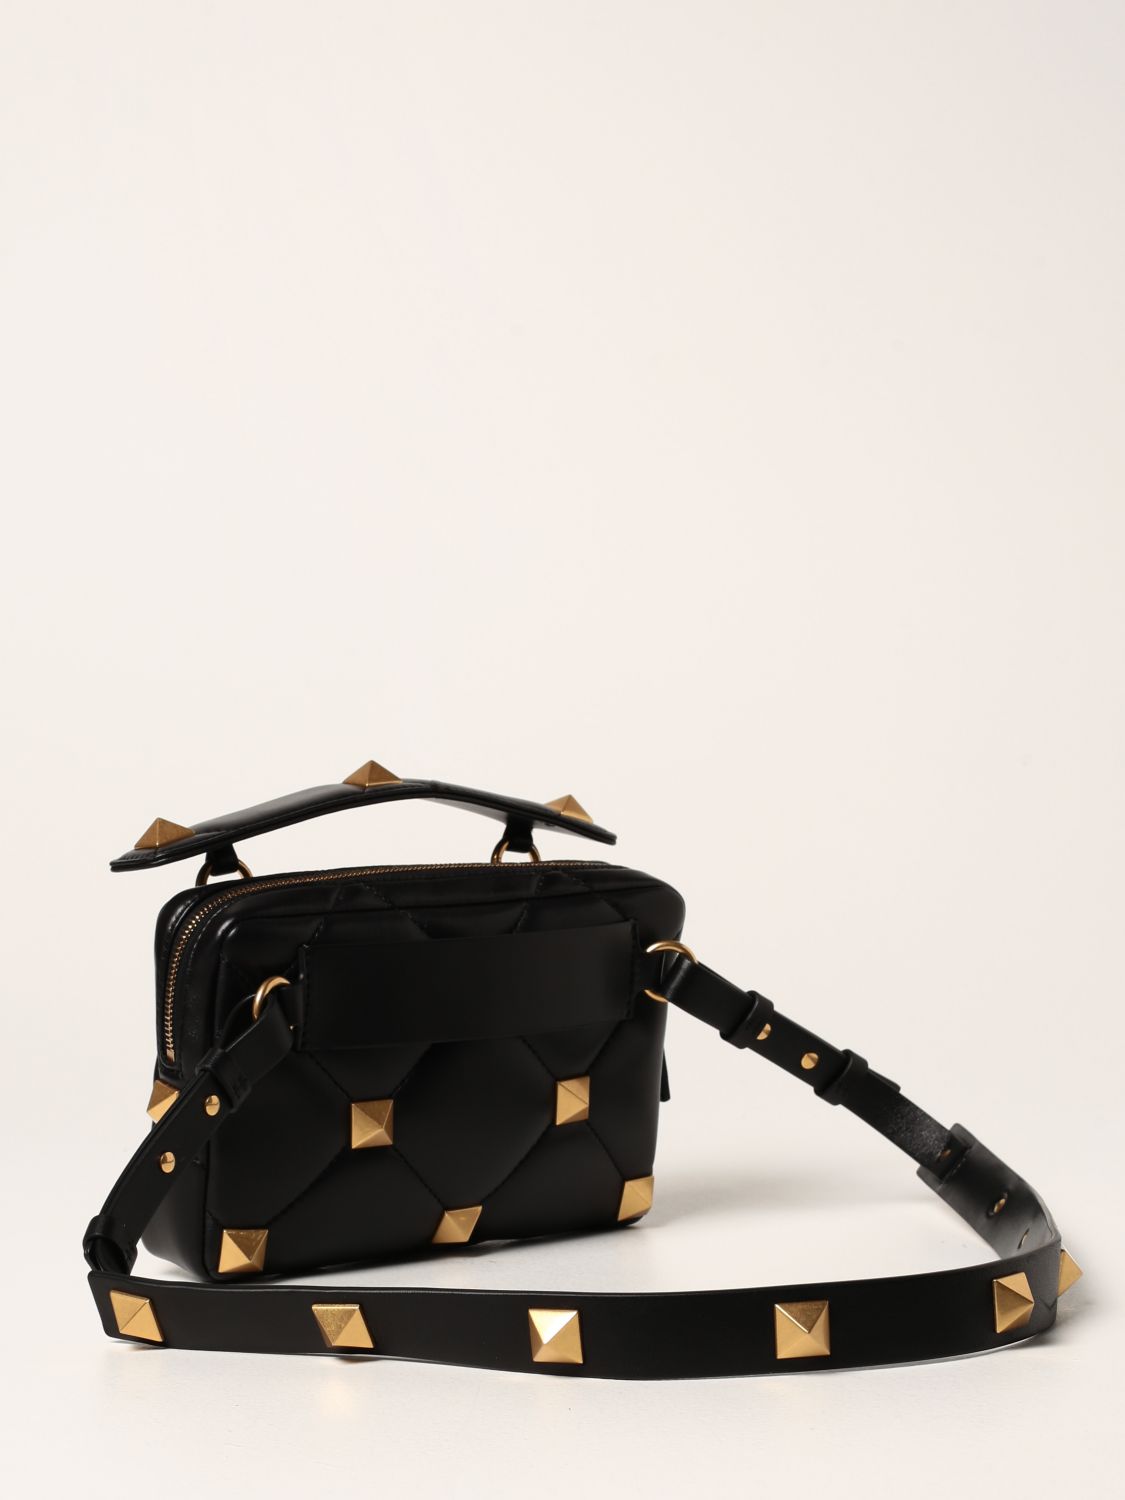 VALENTINO GARAVANI: Roman Studs nappa leather bag - Plum  Valentino  Garavani handbag 1W2B0I60BSF online at